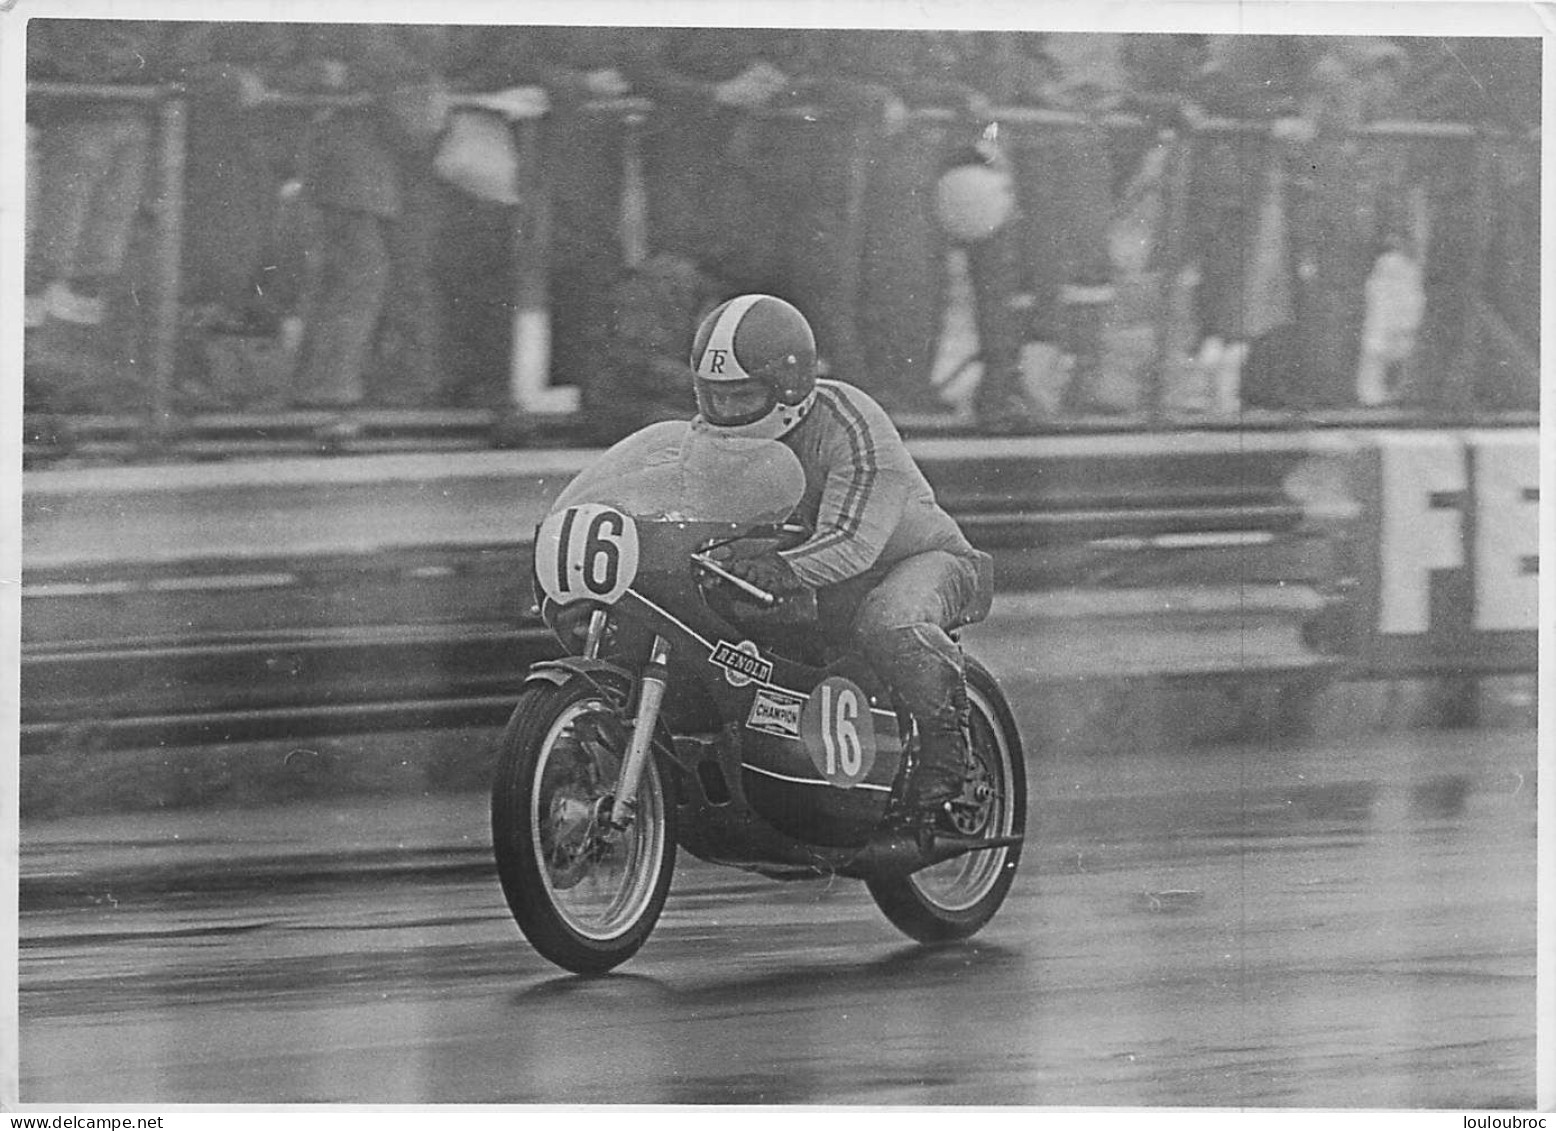 PILOTE  MOTO  TONY RUTTER COURSE ANNEE 1974 YAMAHA 350CC  RACE OF THE YEAR PHOTO DE PRESSE ORIGINALE 18X13CM - Sport